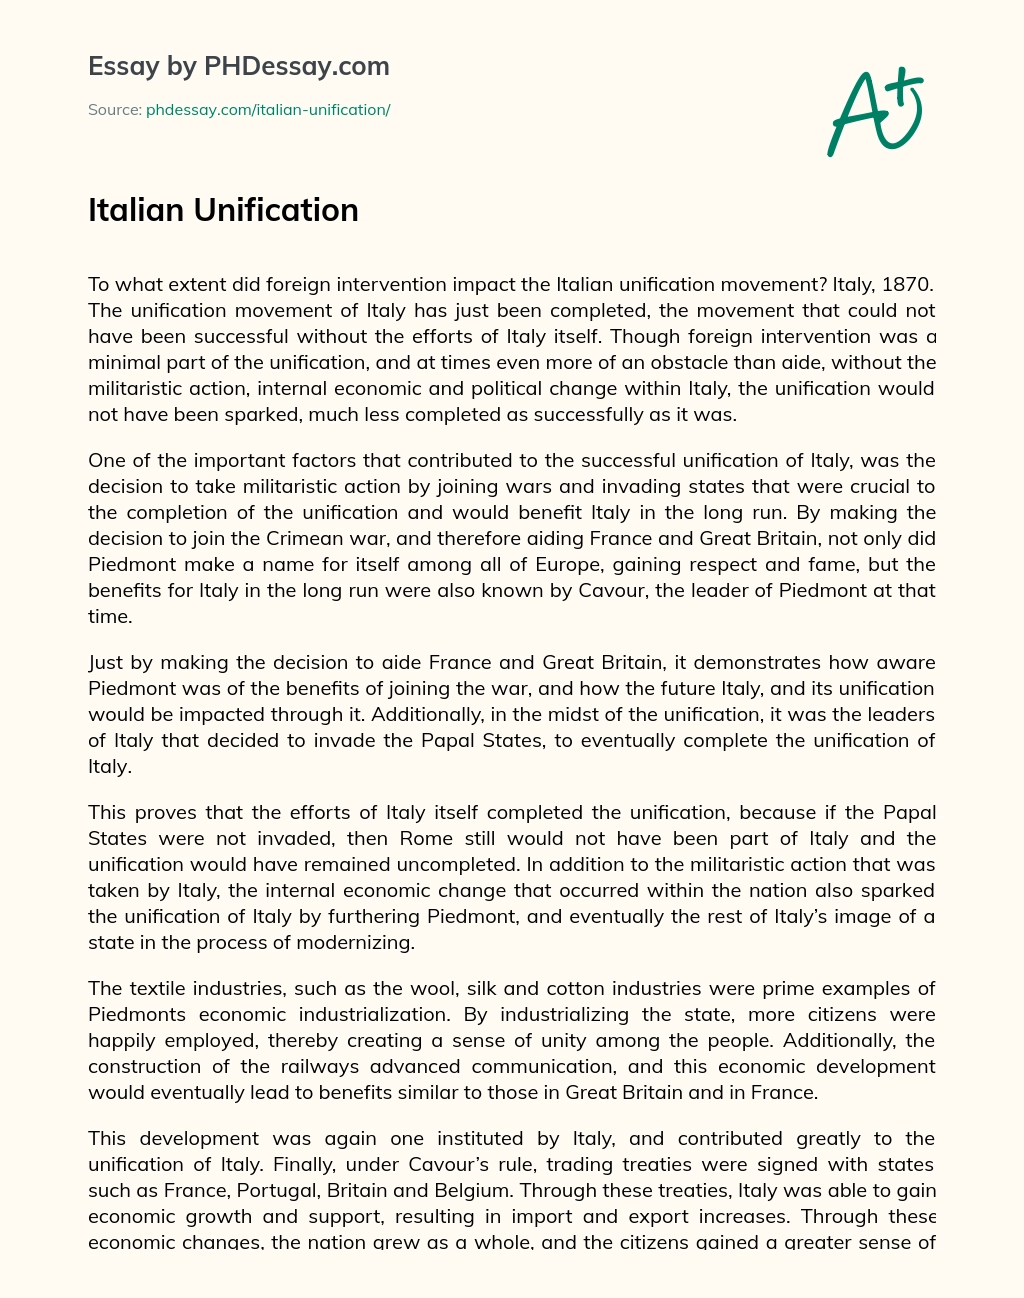 Italian Unification essay